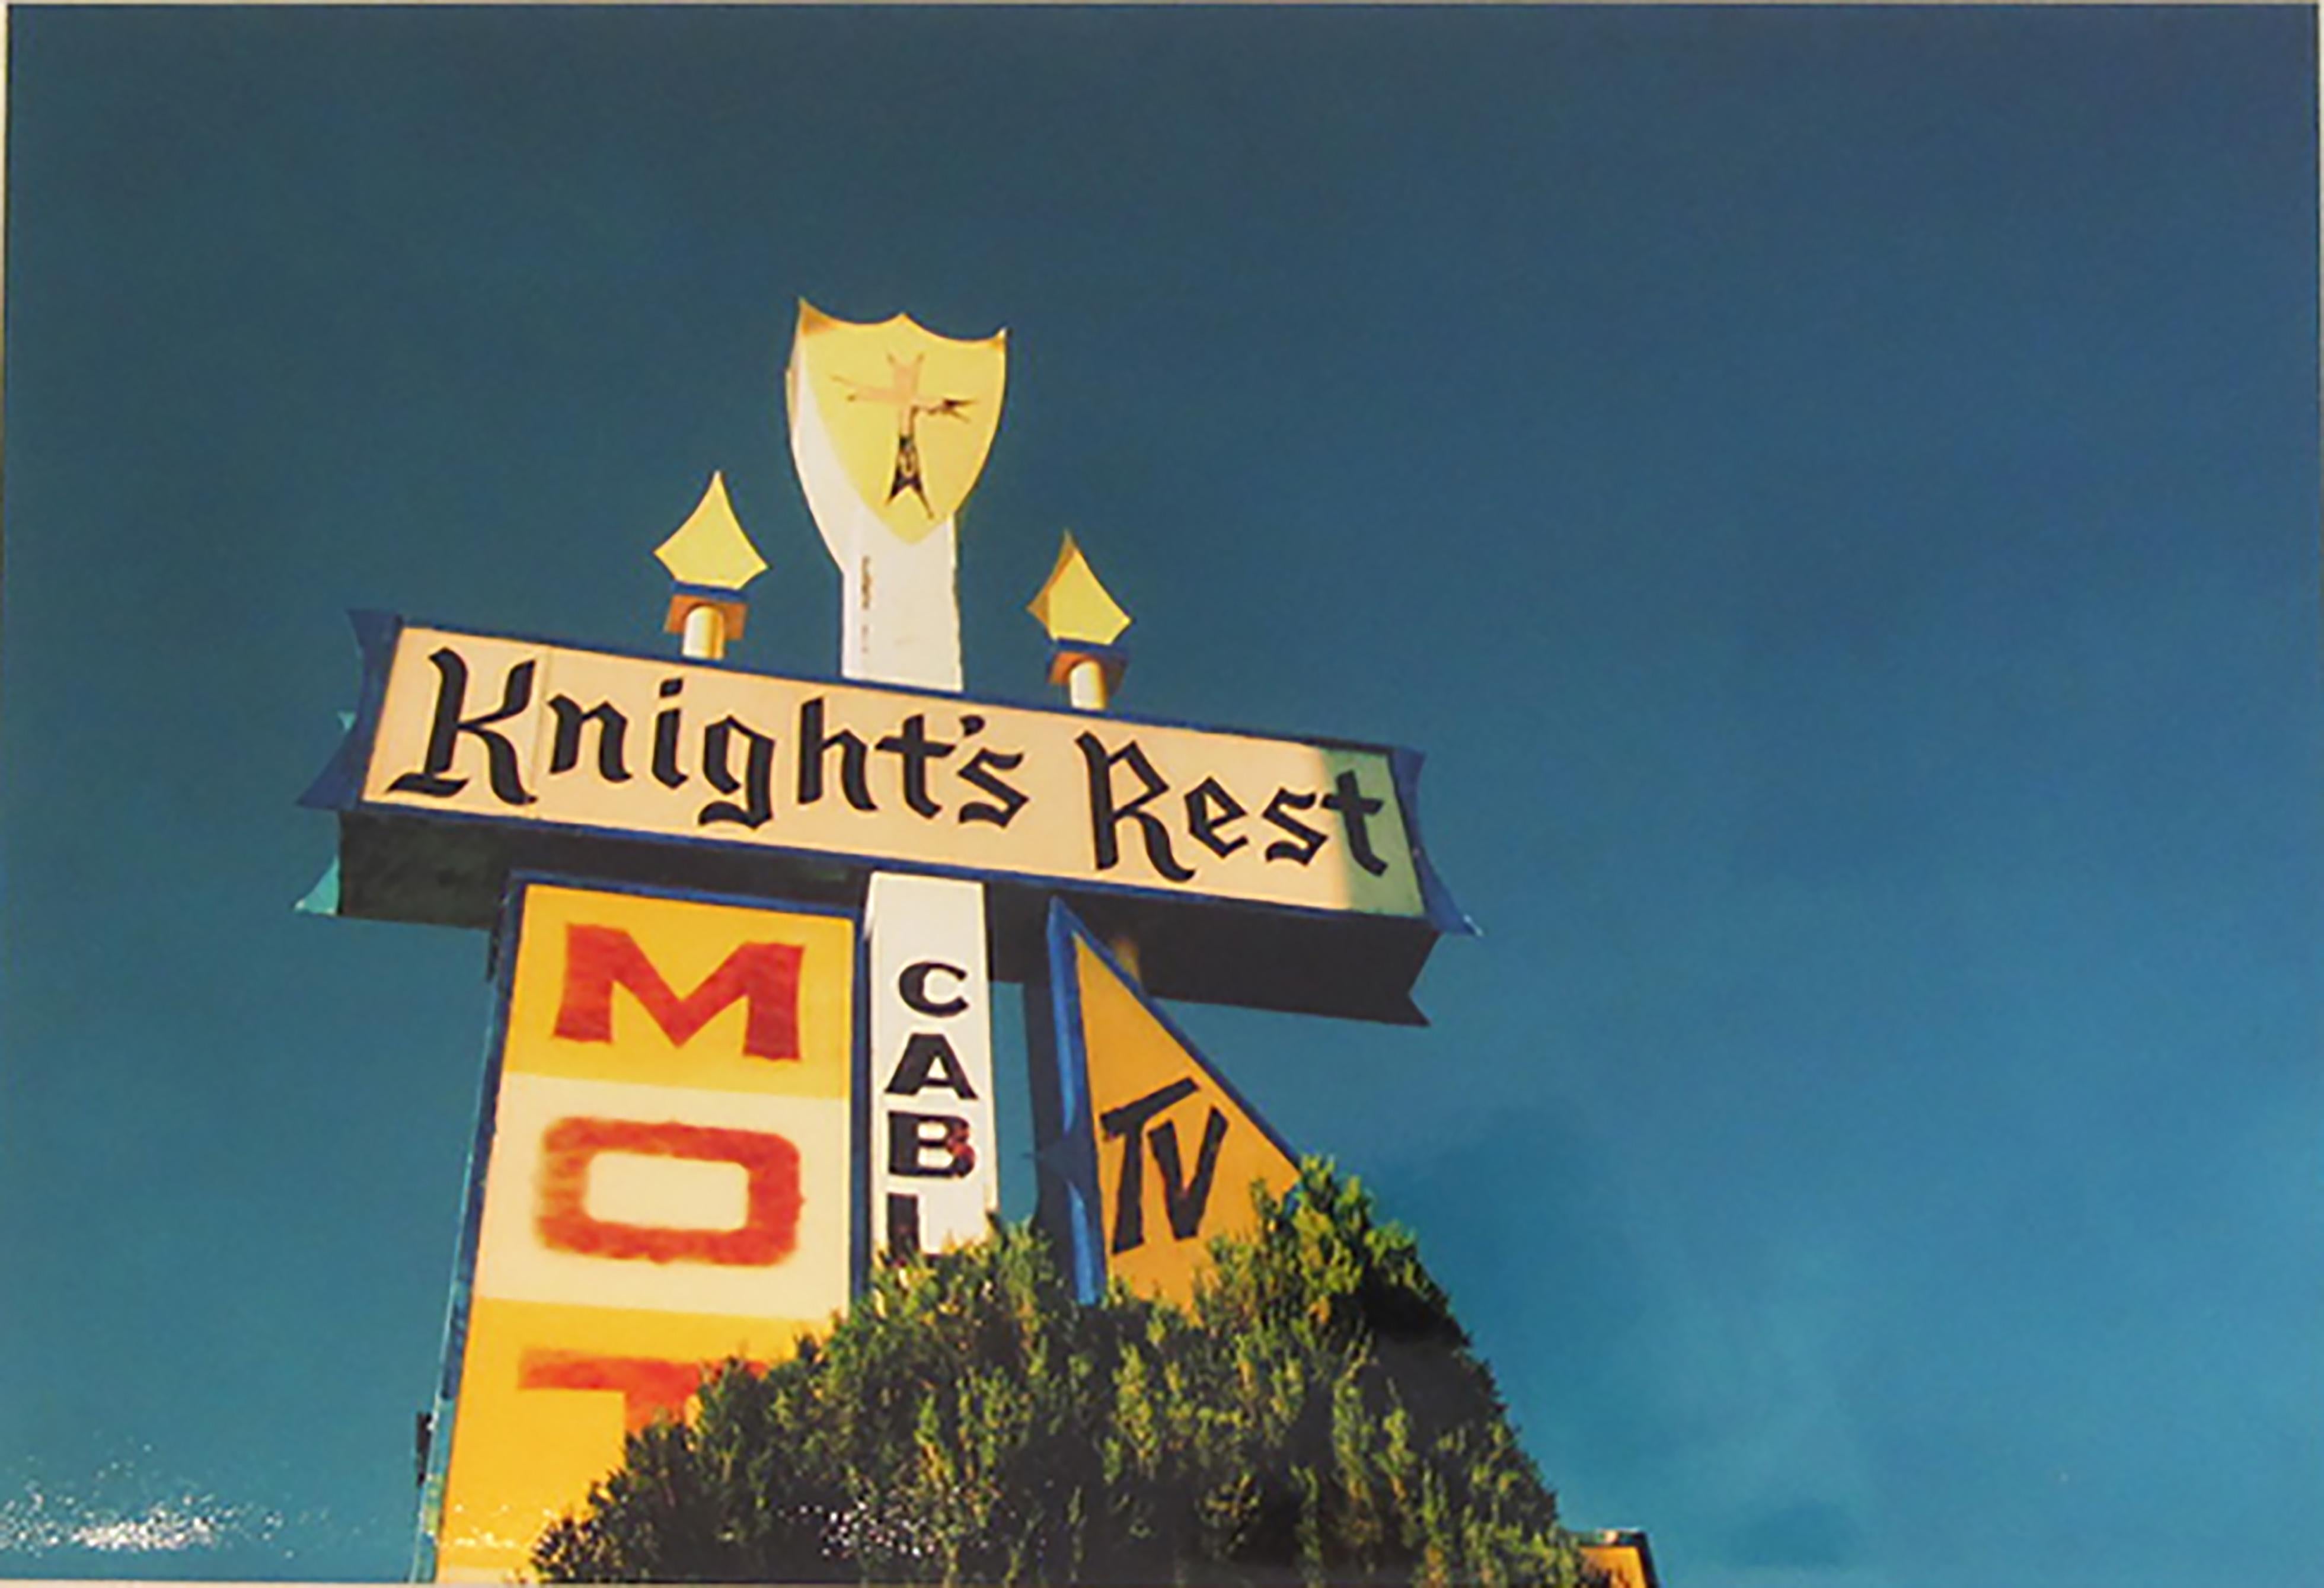 "Knights Rest" Type C Metallic Print - Photograph by Jen Zahigian